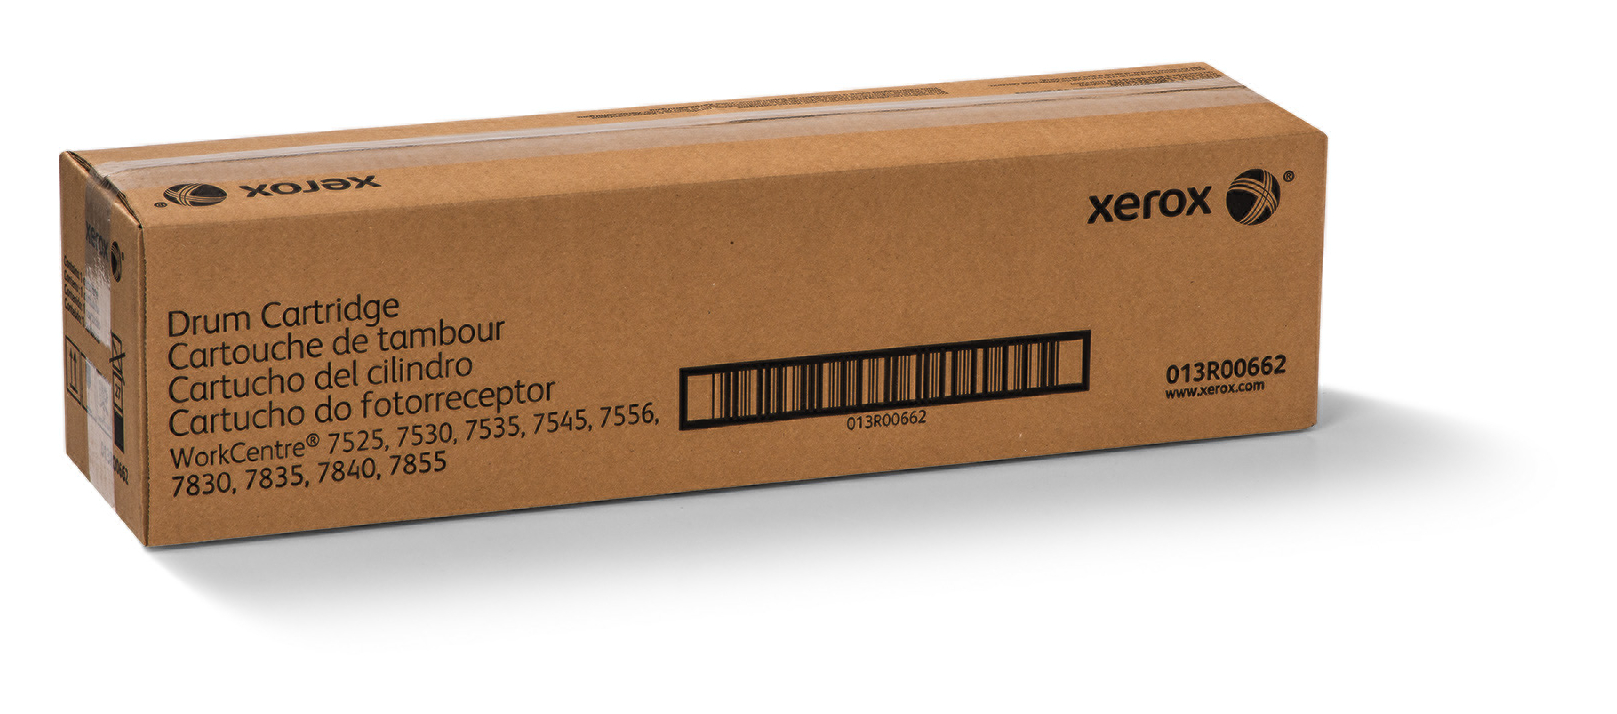 Xerox Drum Cartridge-Long Life Maintenance Item 013R00662 Genuine Xerox  Supplies